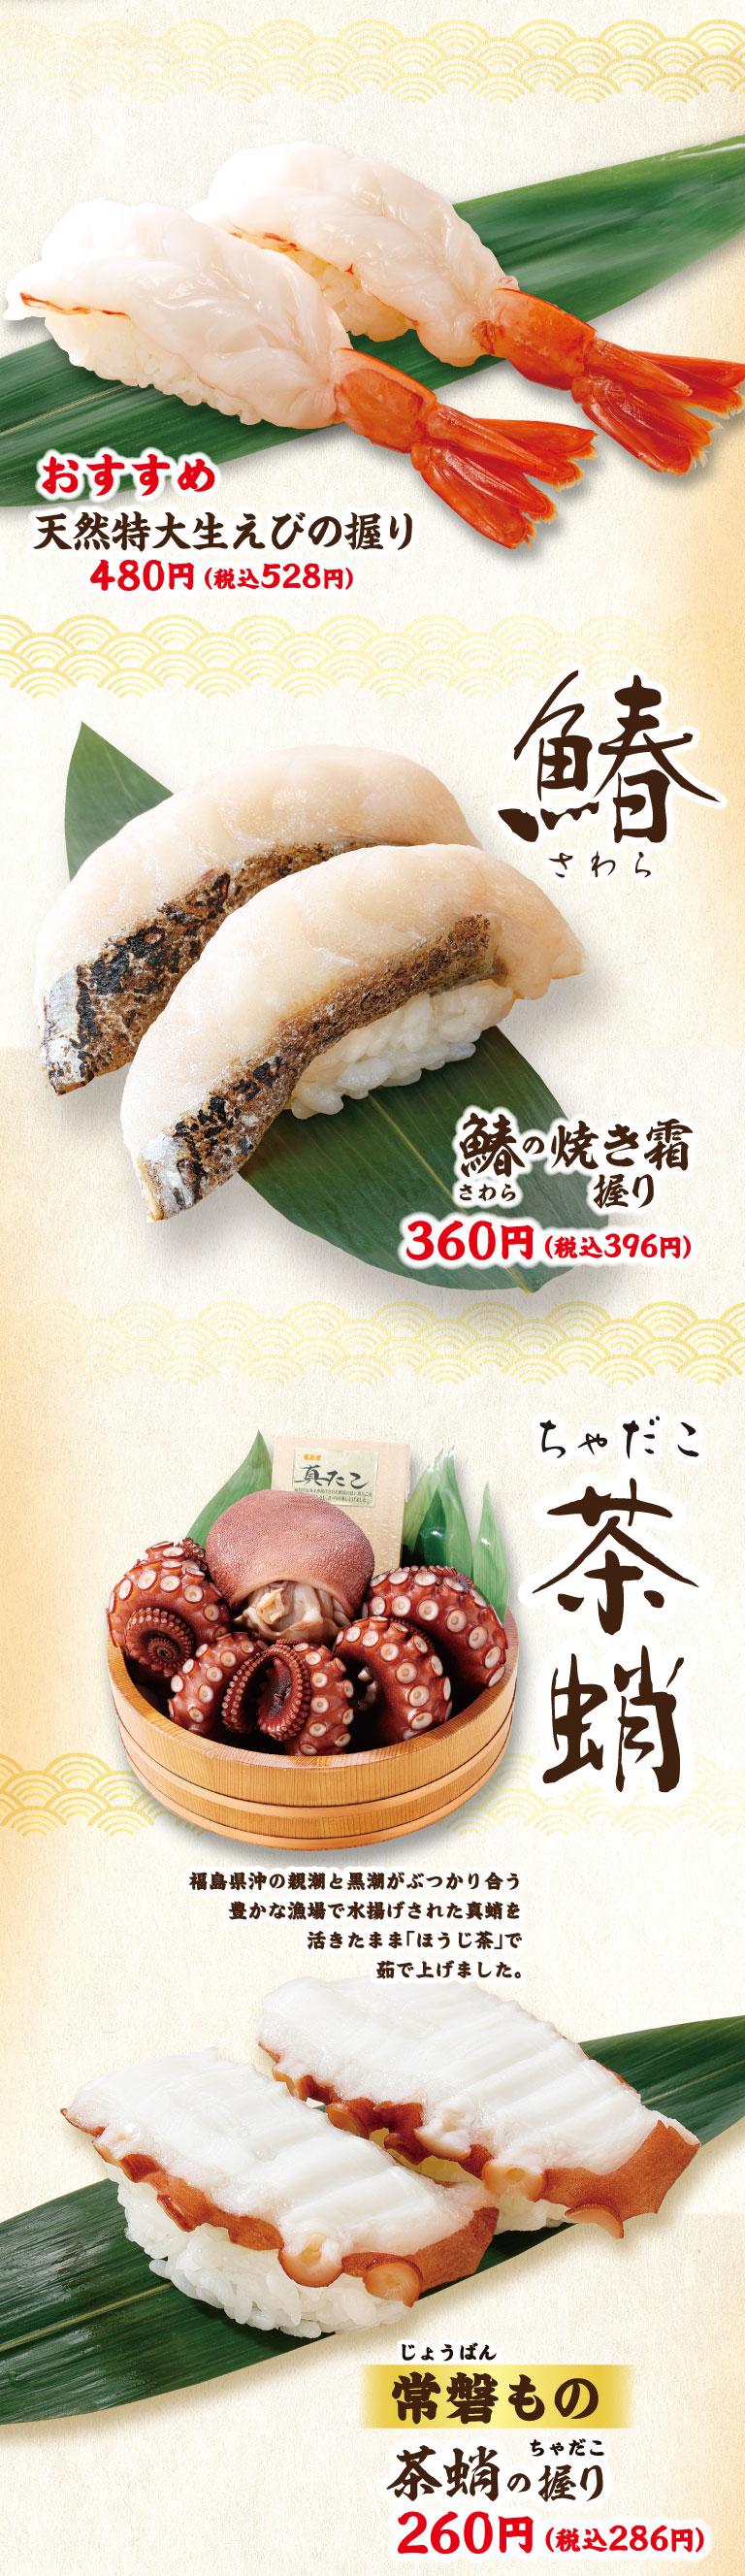 Natural extra large raw shrimp nigiri, grilled frosted Spanish mackerel nigiri, tea octopus nigiri